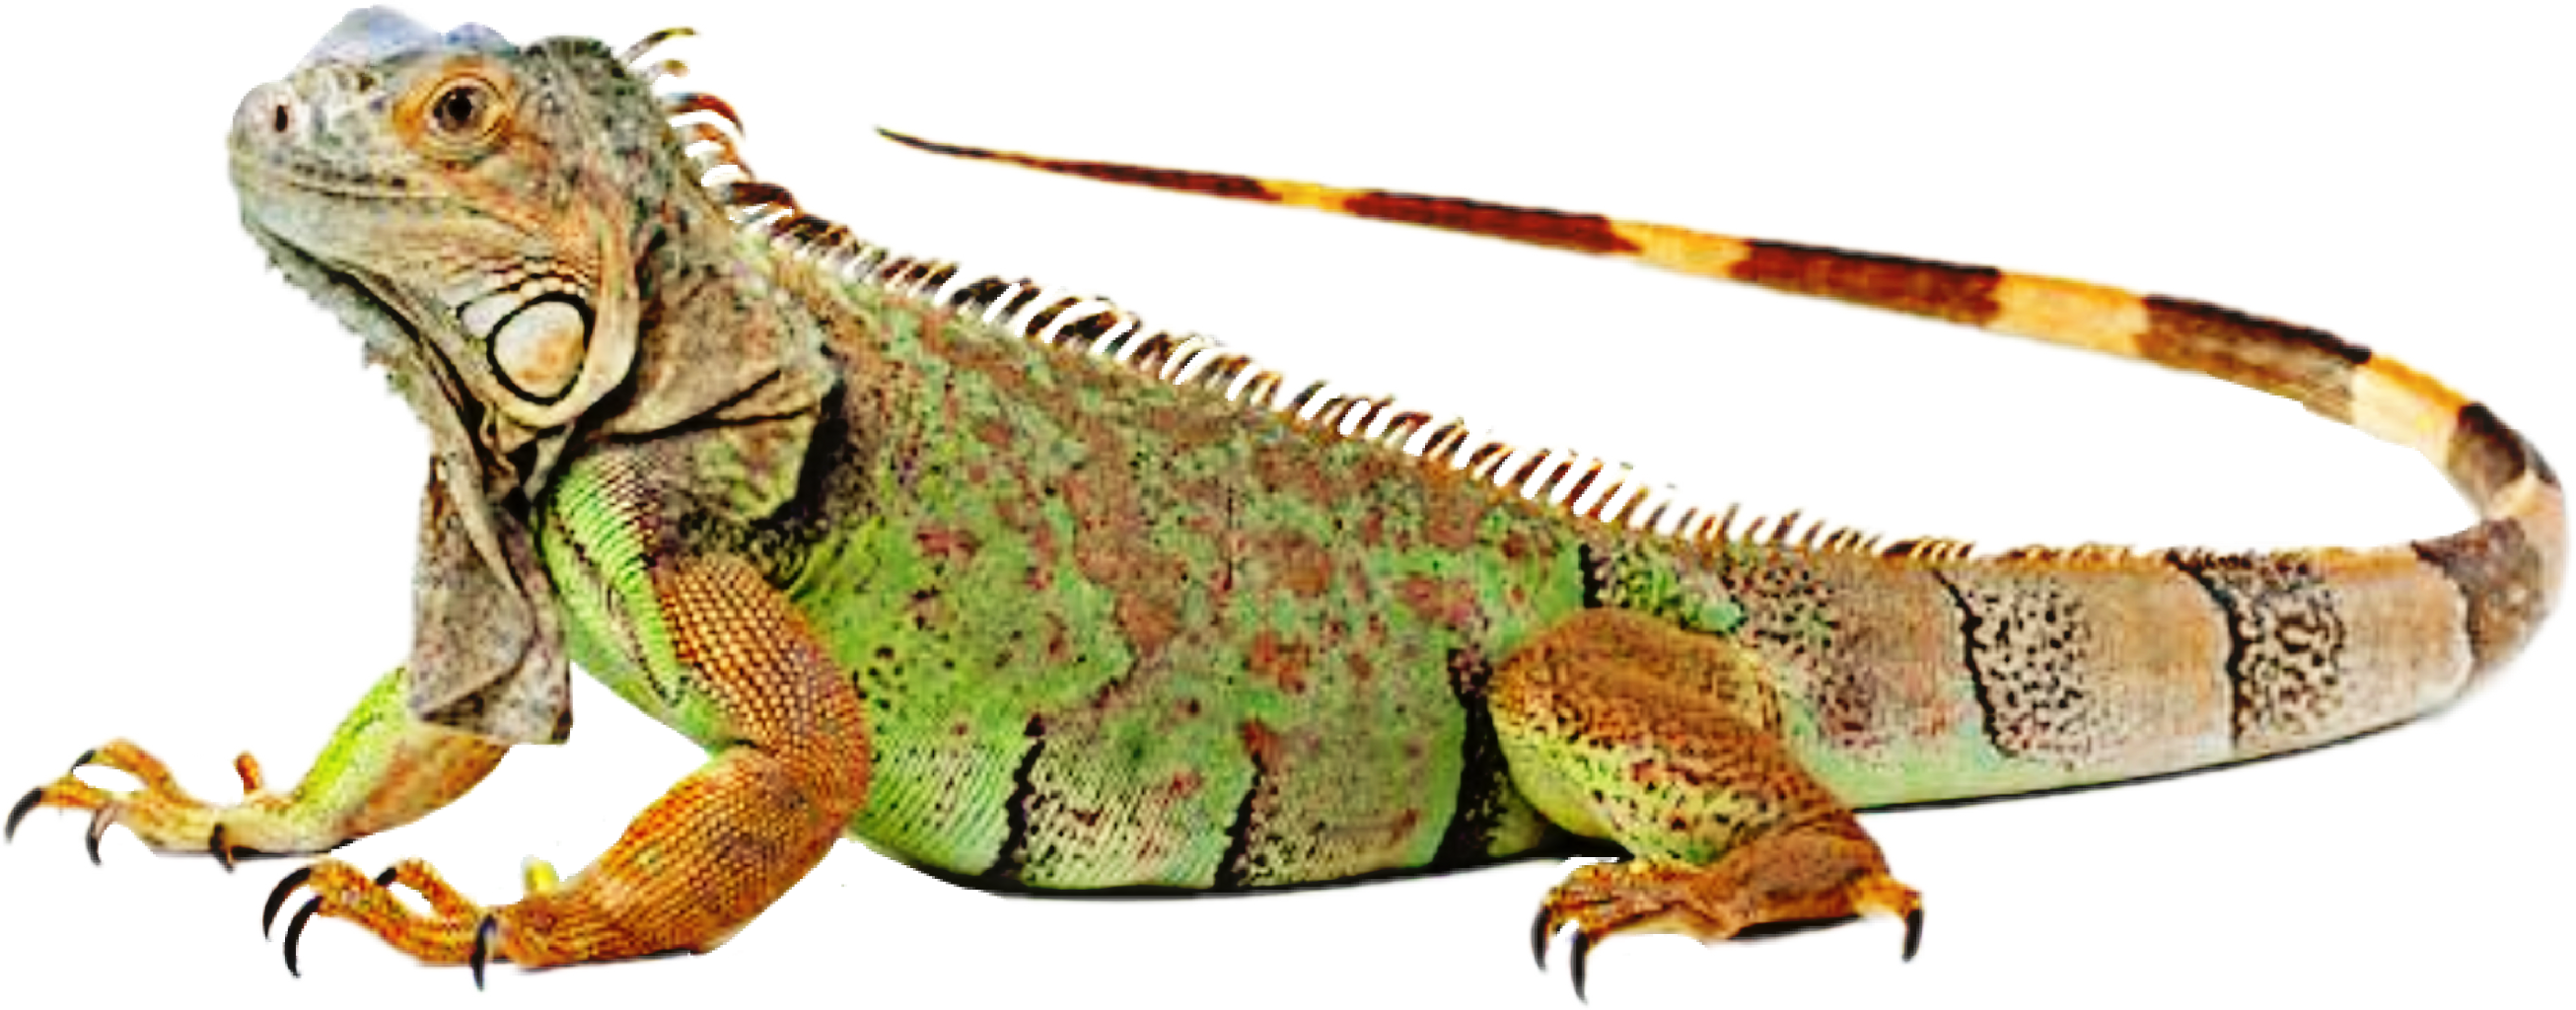 Iguana clipart colorful. Lizard reptile sticker by